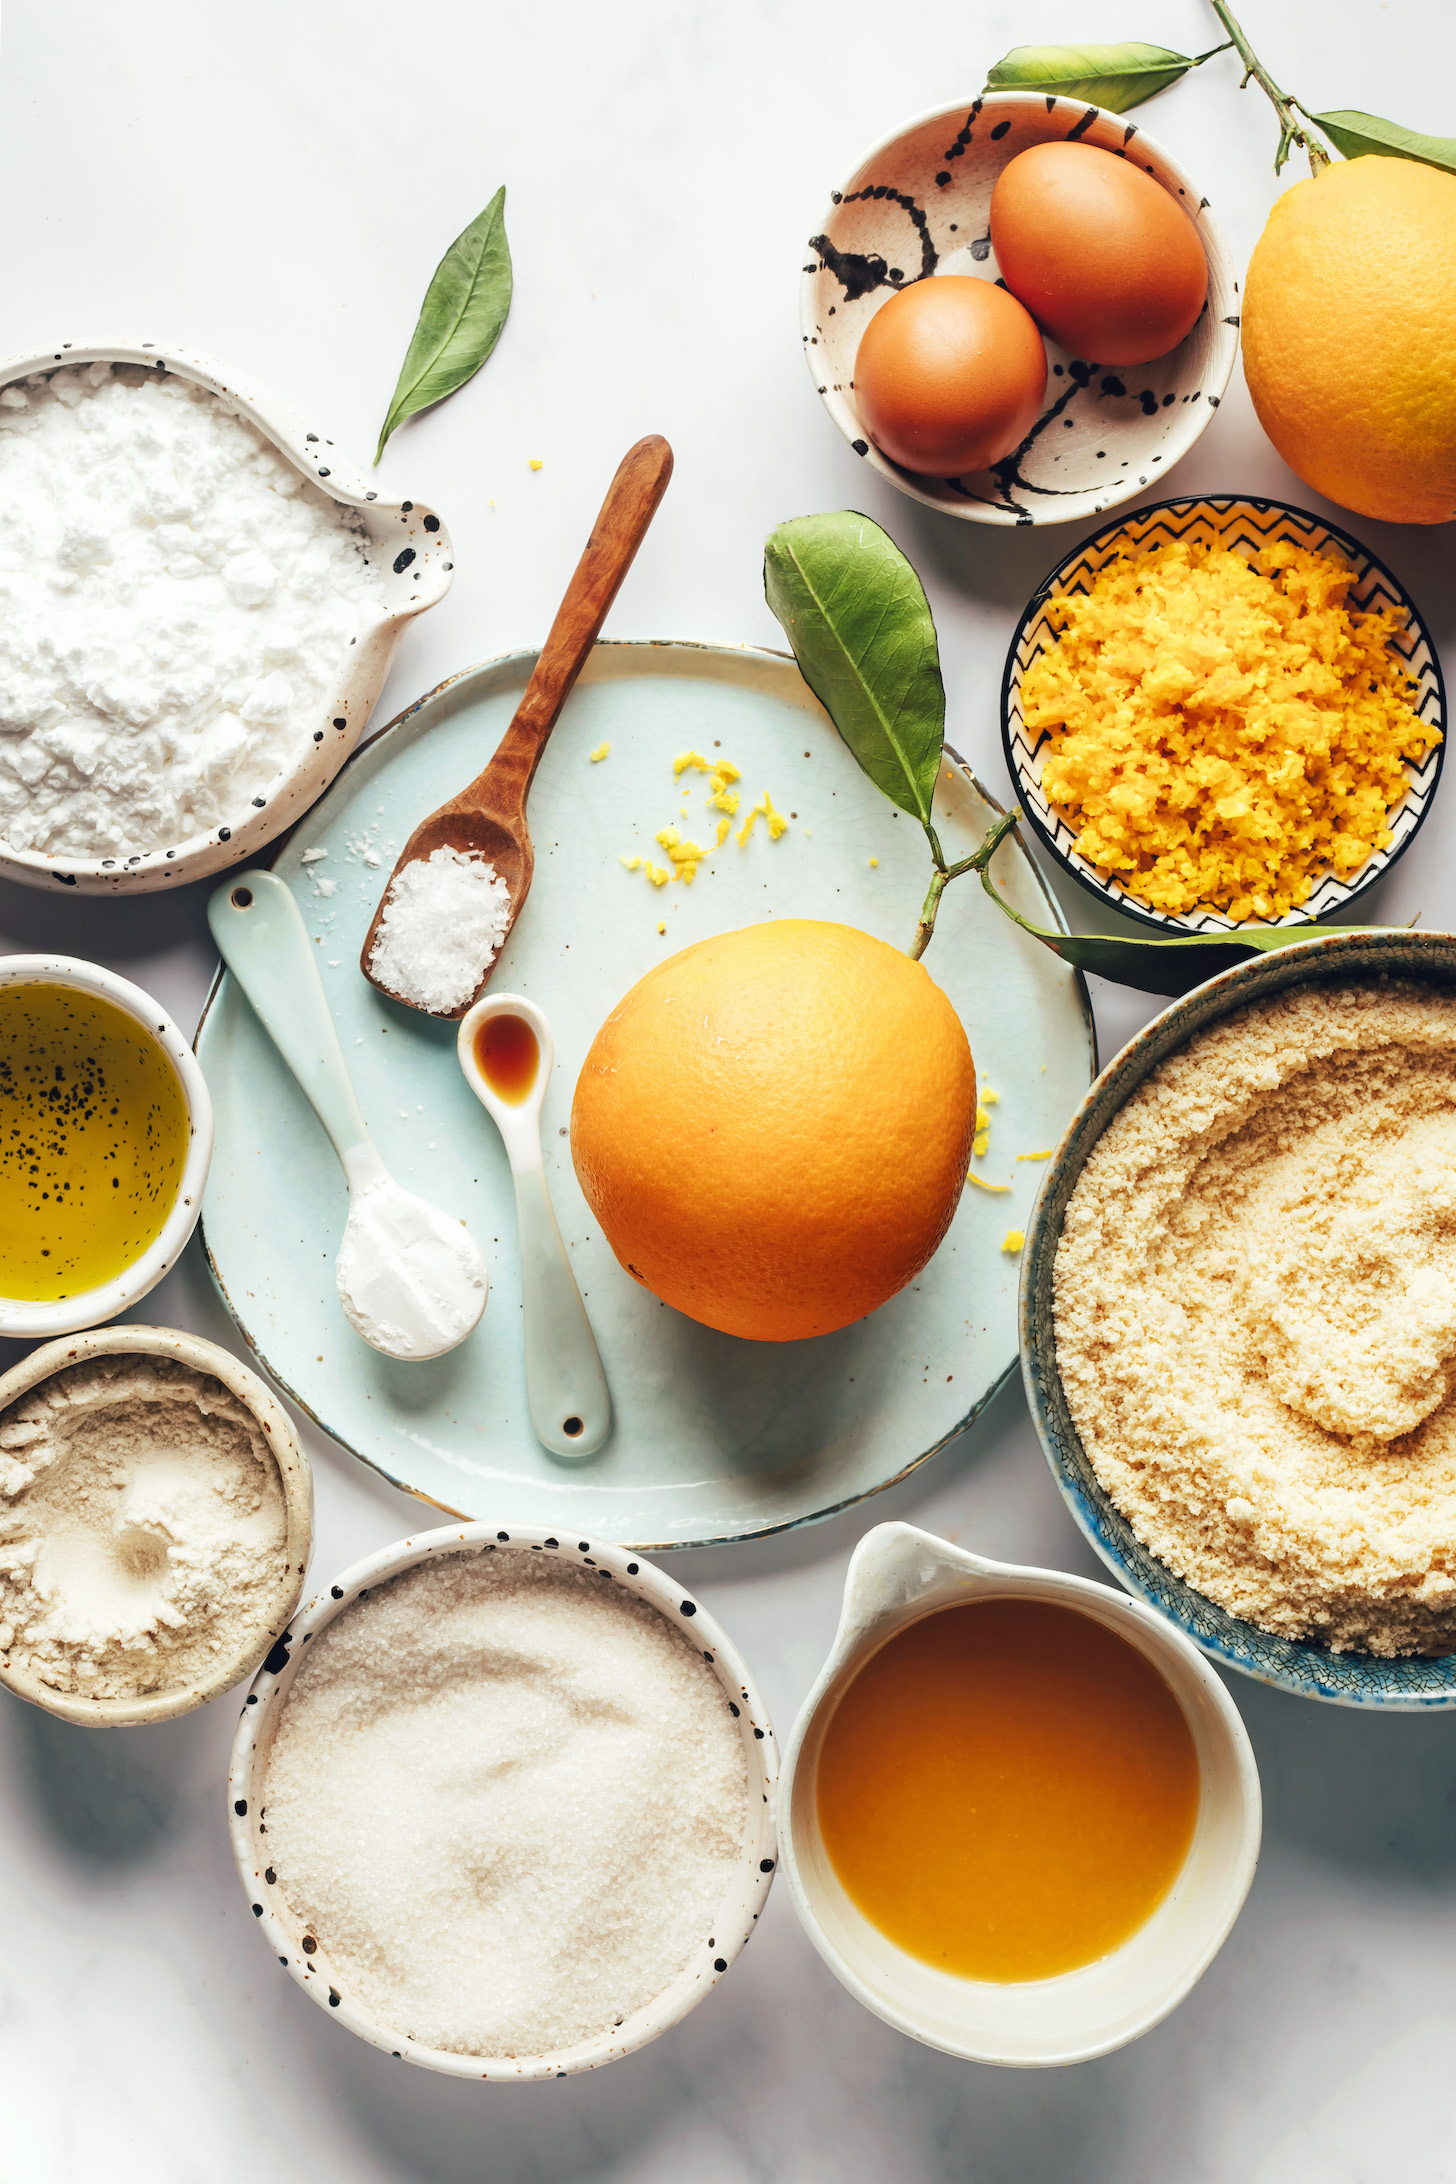 Eggs, orange zest, oranges, almond flour, orange juice, cane sugar, brown rice flour, olive oil, baking powder, salt, almond extract, and potato starch